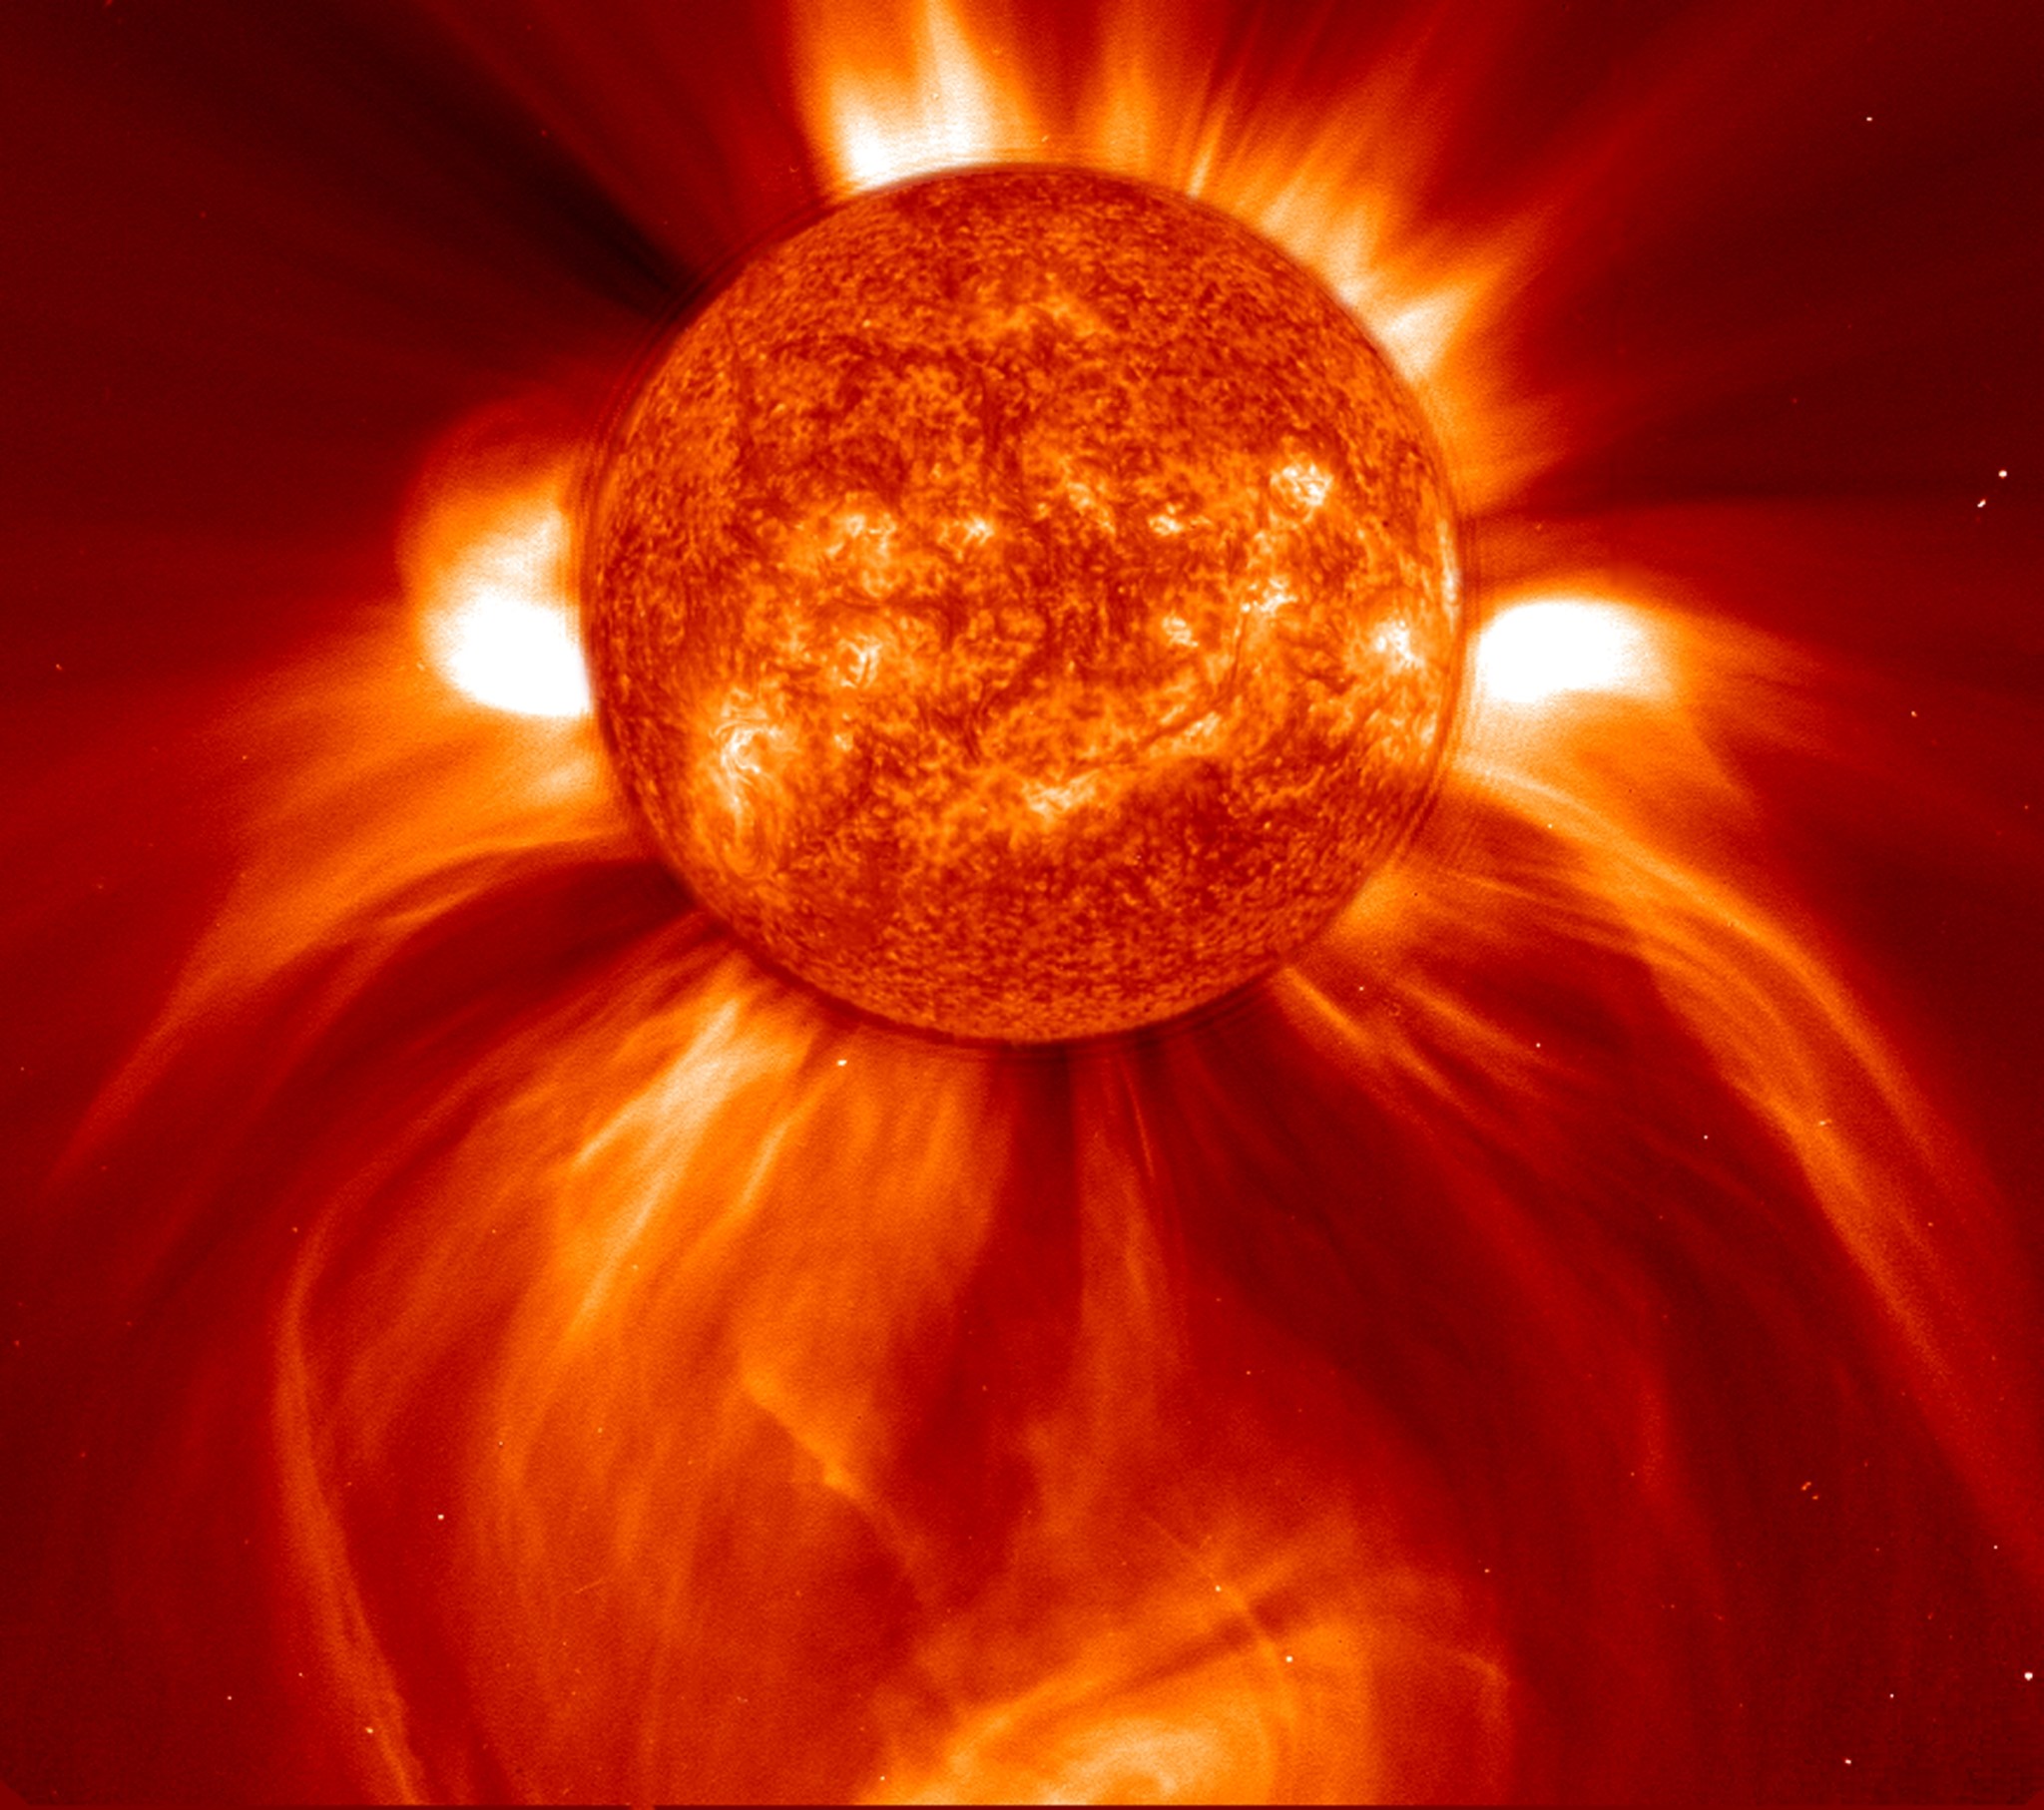 SOHO image of the sun from Jan. 8, 2002